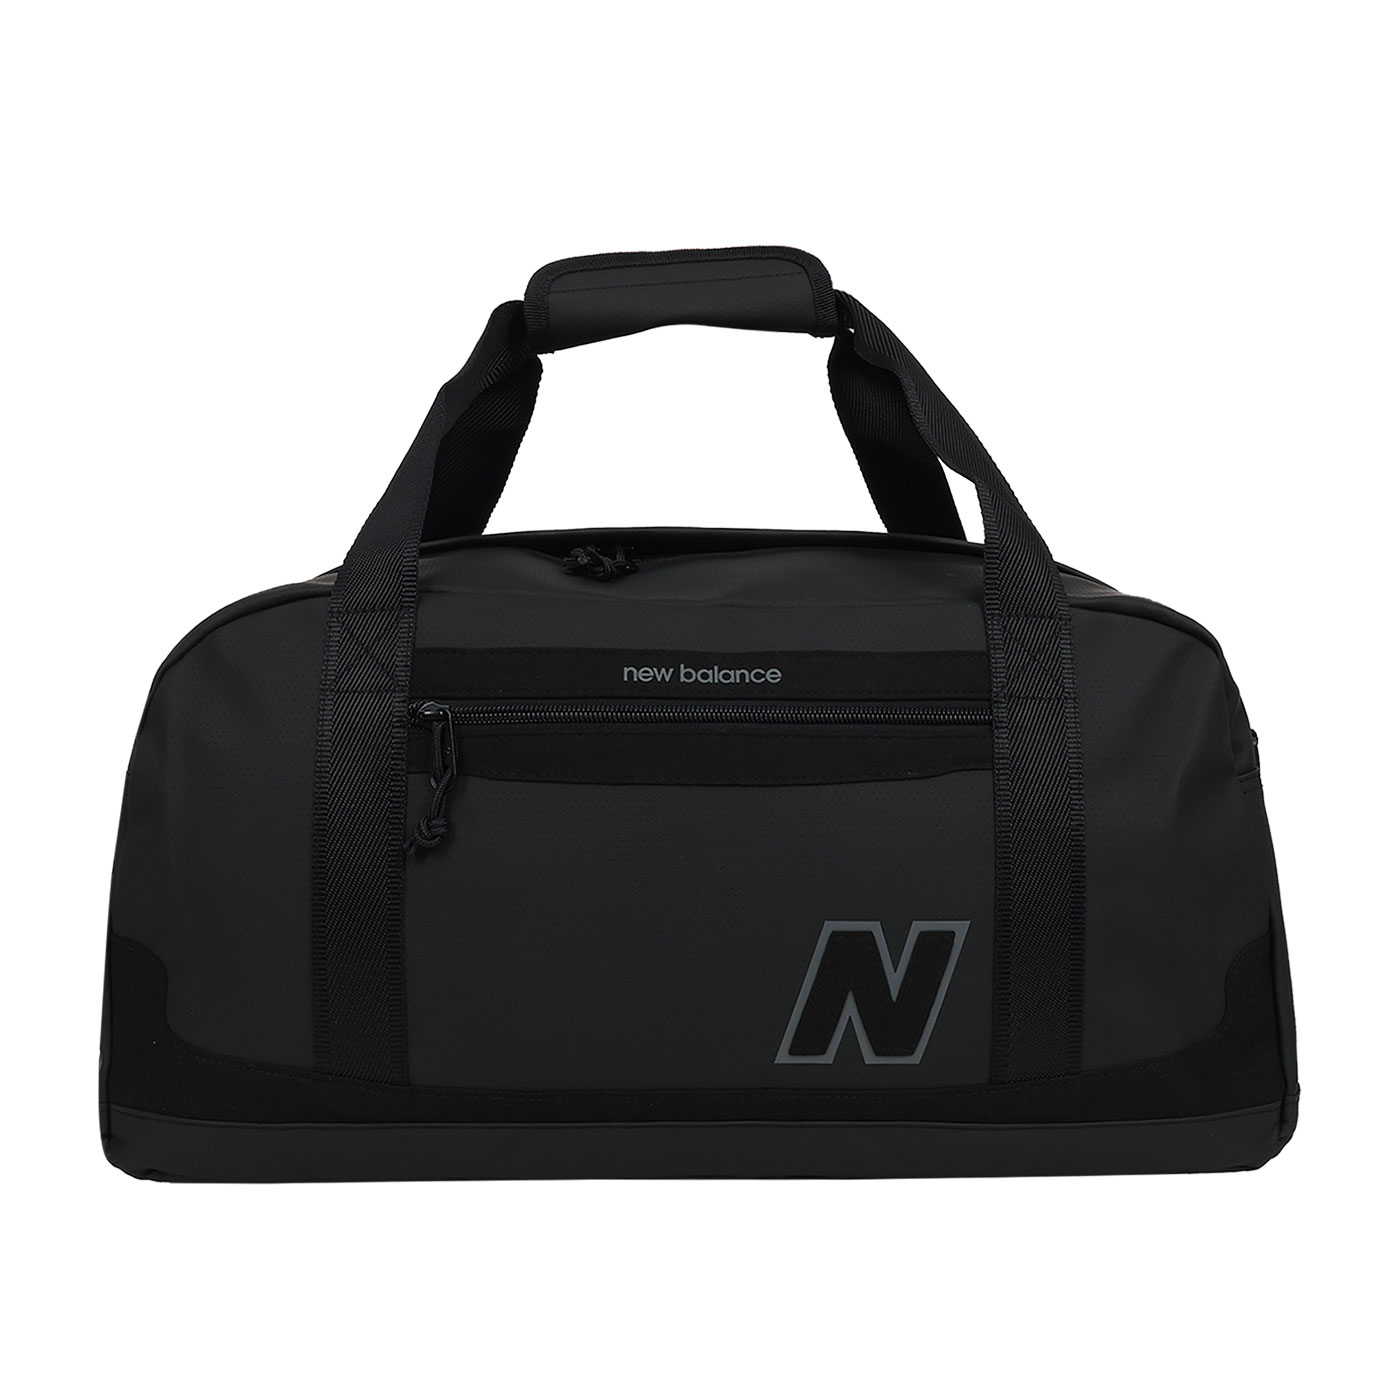 NEW BALANCE 大型行李袋  LAB23107BKK - 黑灰